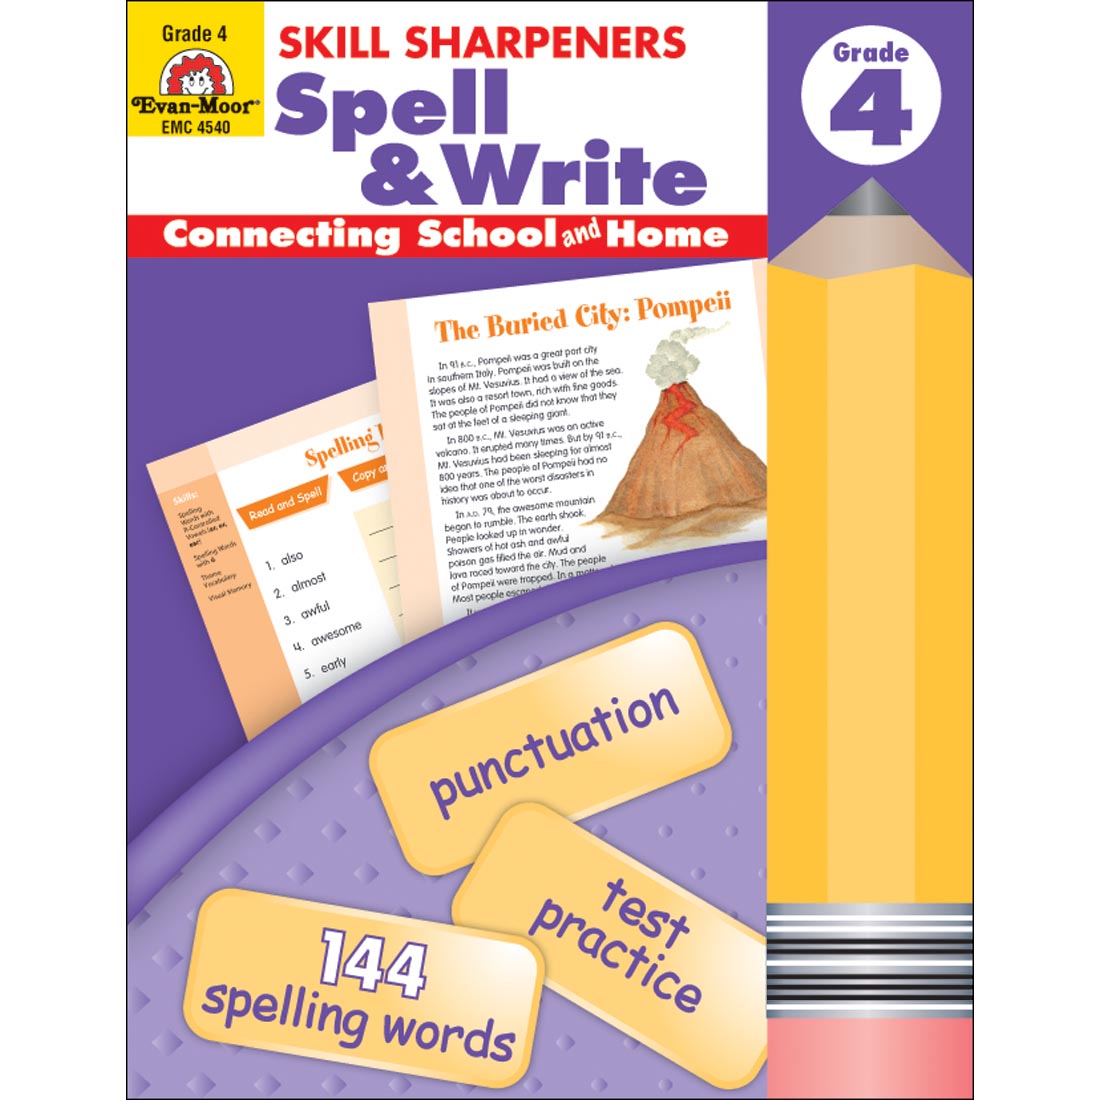 Skill Sharpeners Spell & Write by Evan-Moor Grade 4